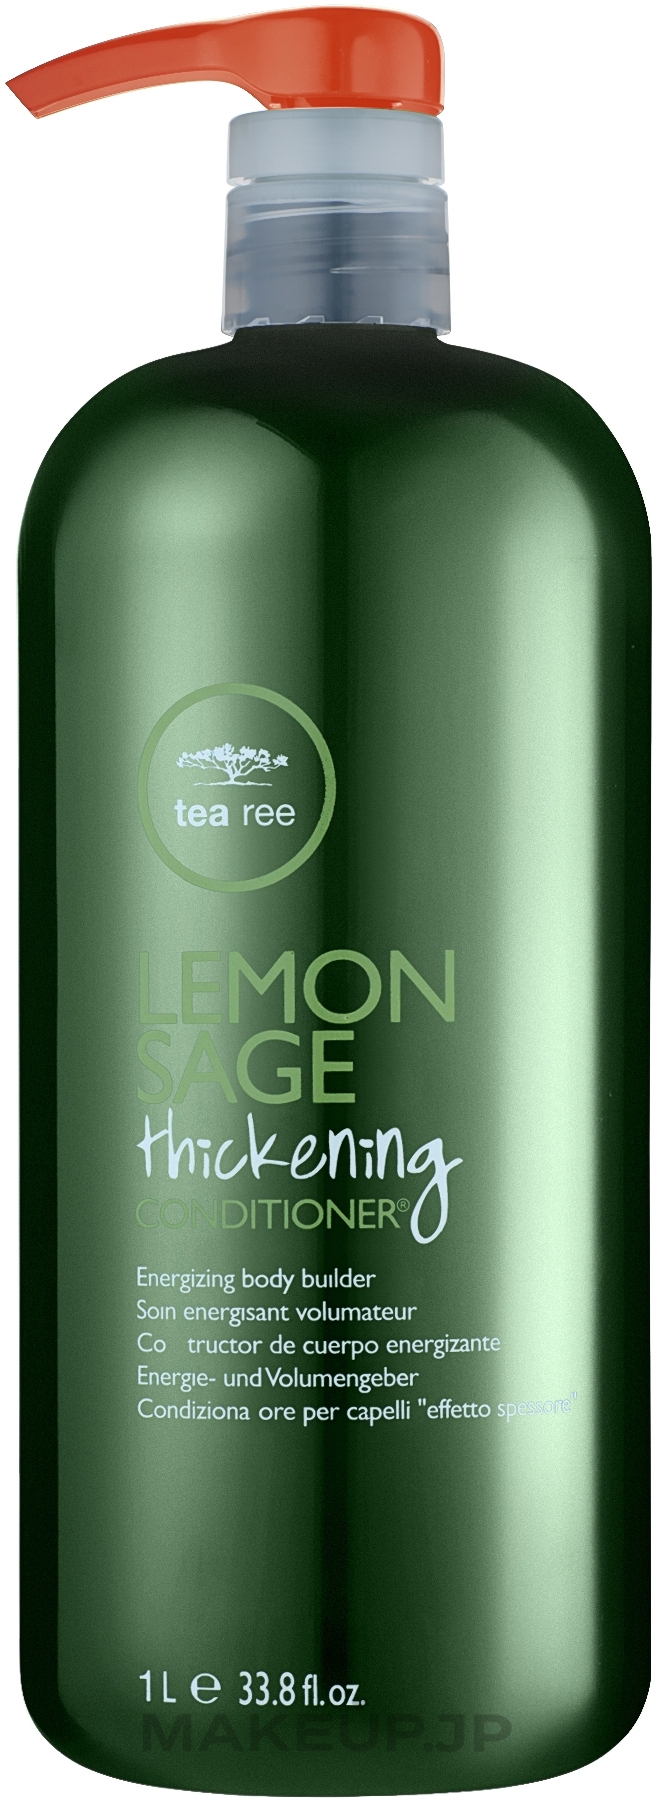 Tea Tree, Lemon & Sage Extracts Conditioner - Paul Mitchell Tea Tree Lemon Sage Thickening Conditioner — photo 1000 ml